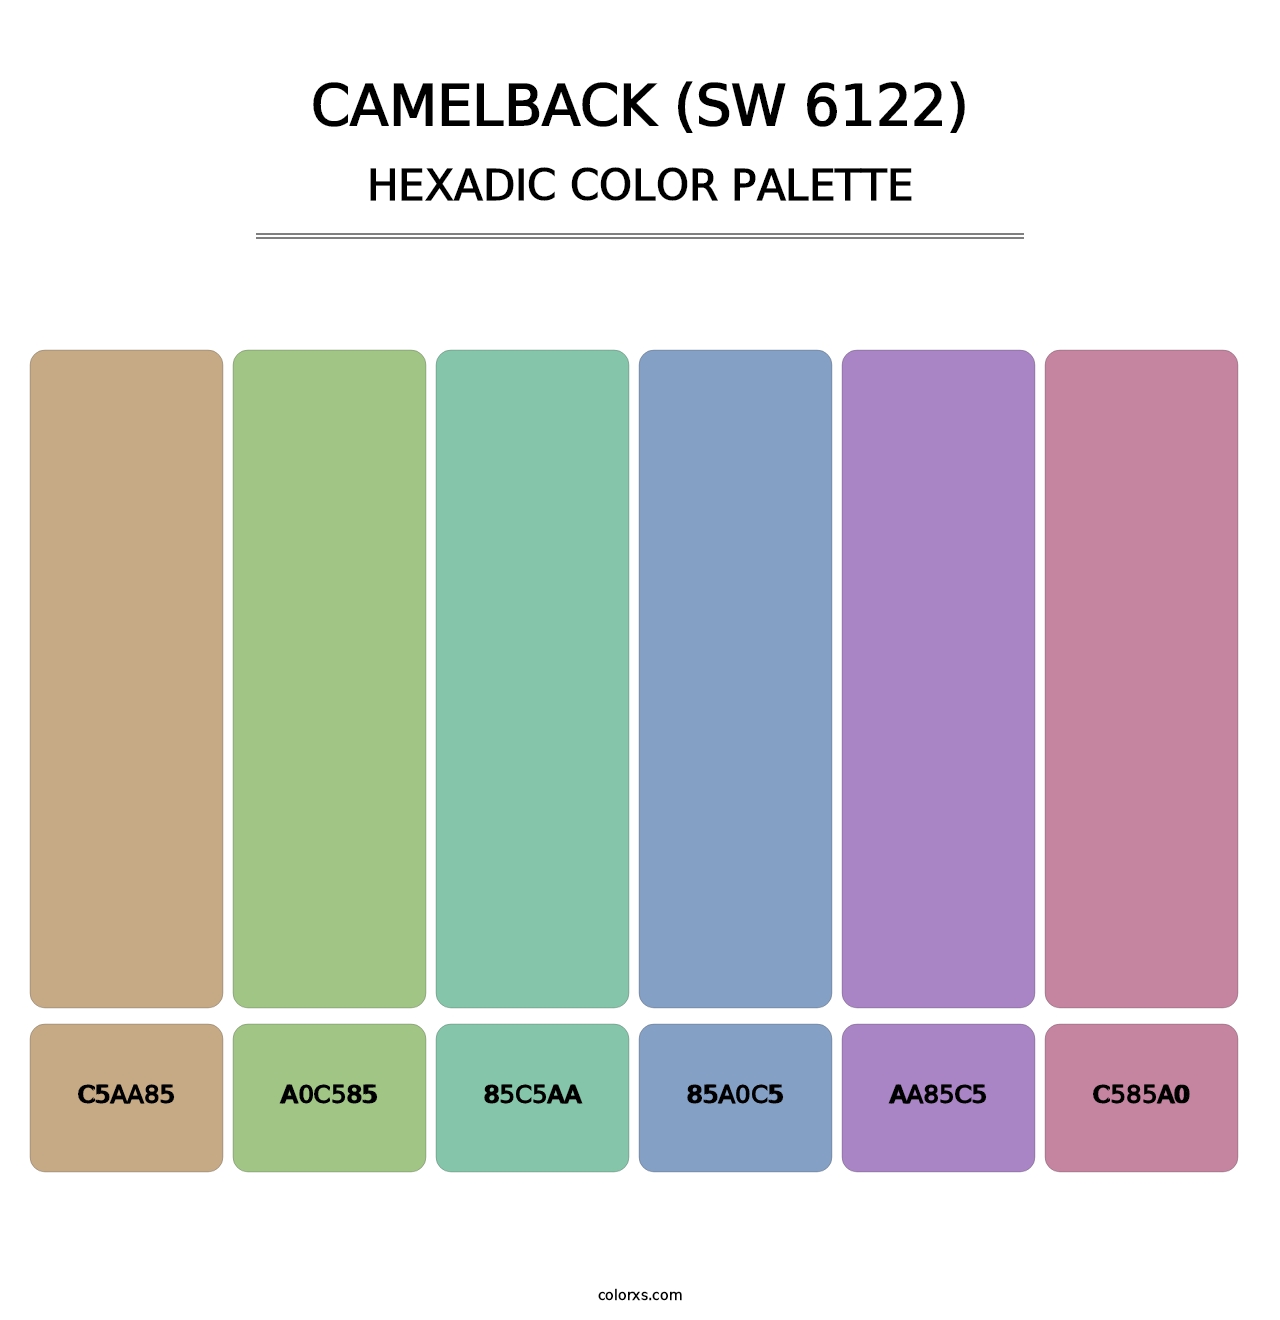 Camelback (SW 6122) - Hexadic Color Palette